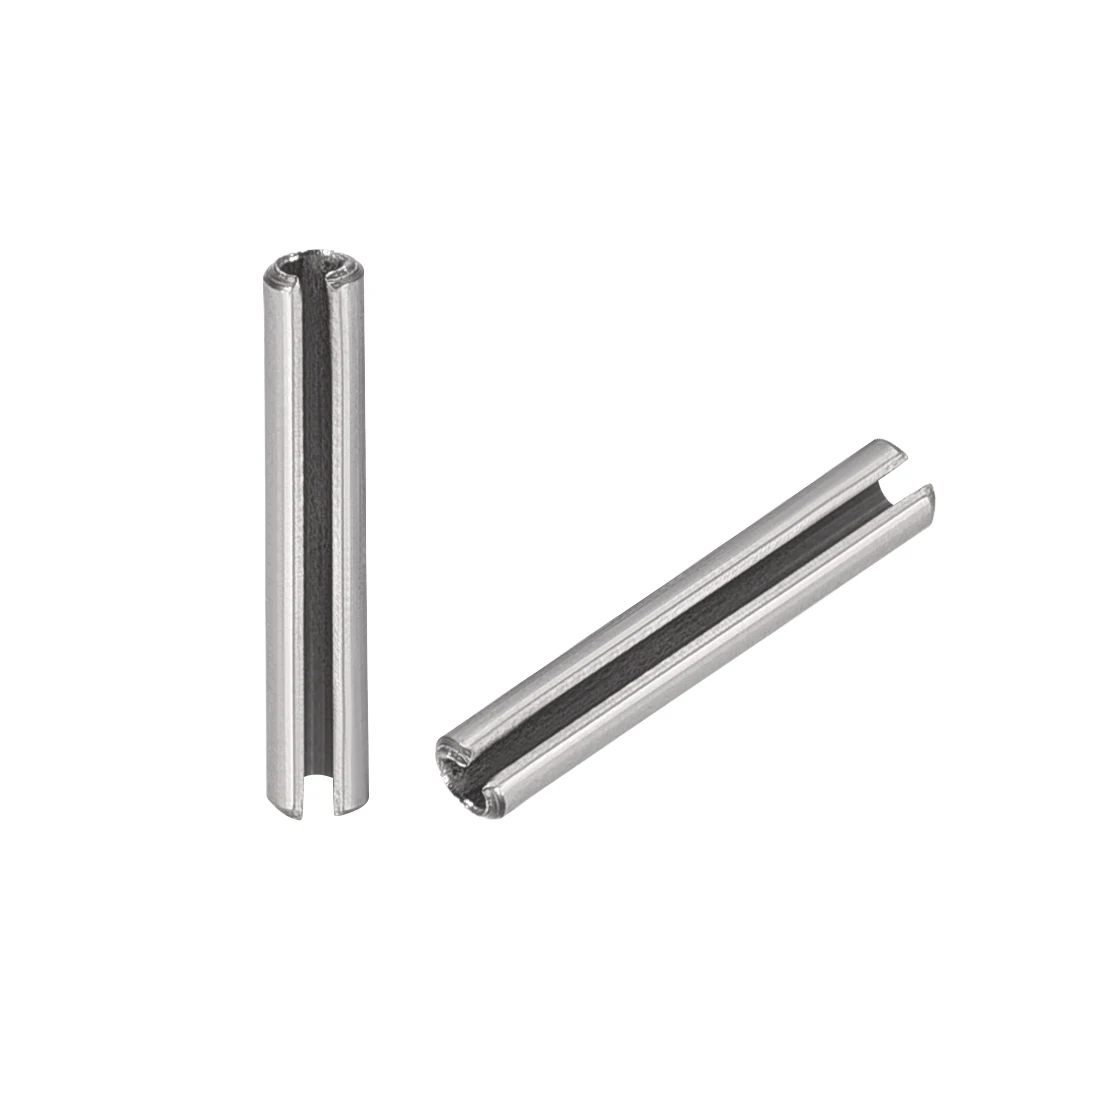 uxcell M1.5 x 12mm 304 Stainless Steel Split Spring Roll Dowel Pins Plain Finish 20Pcs | Обустройство дома